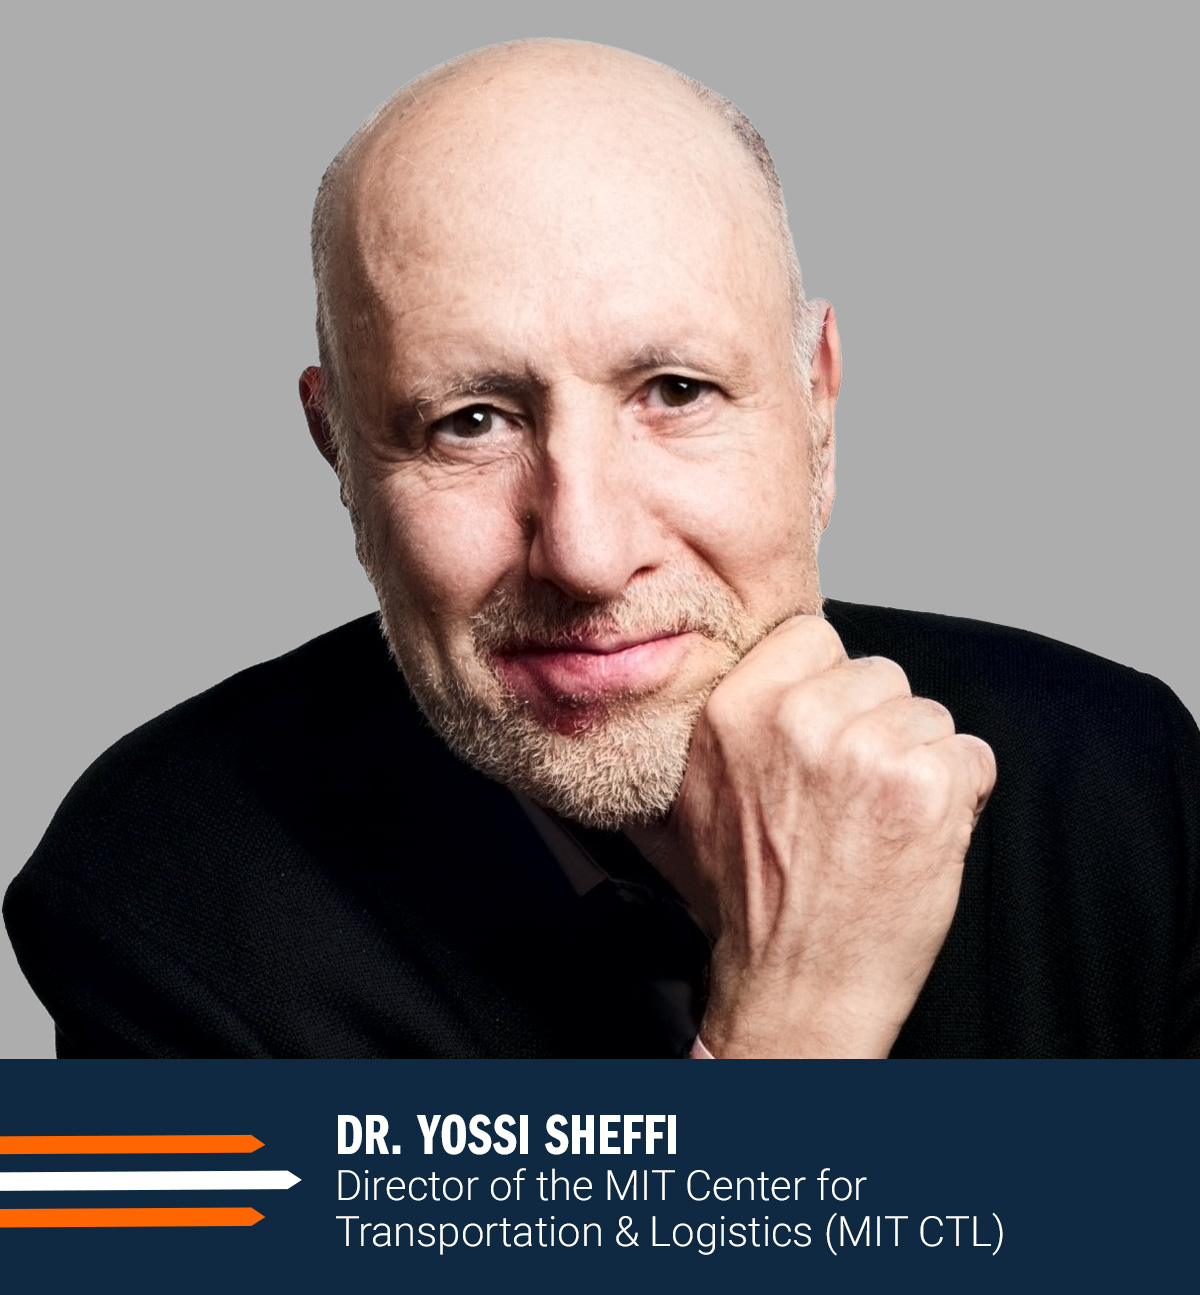 Dr. Yossi Sheffi